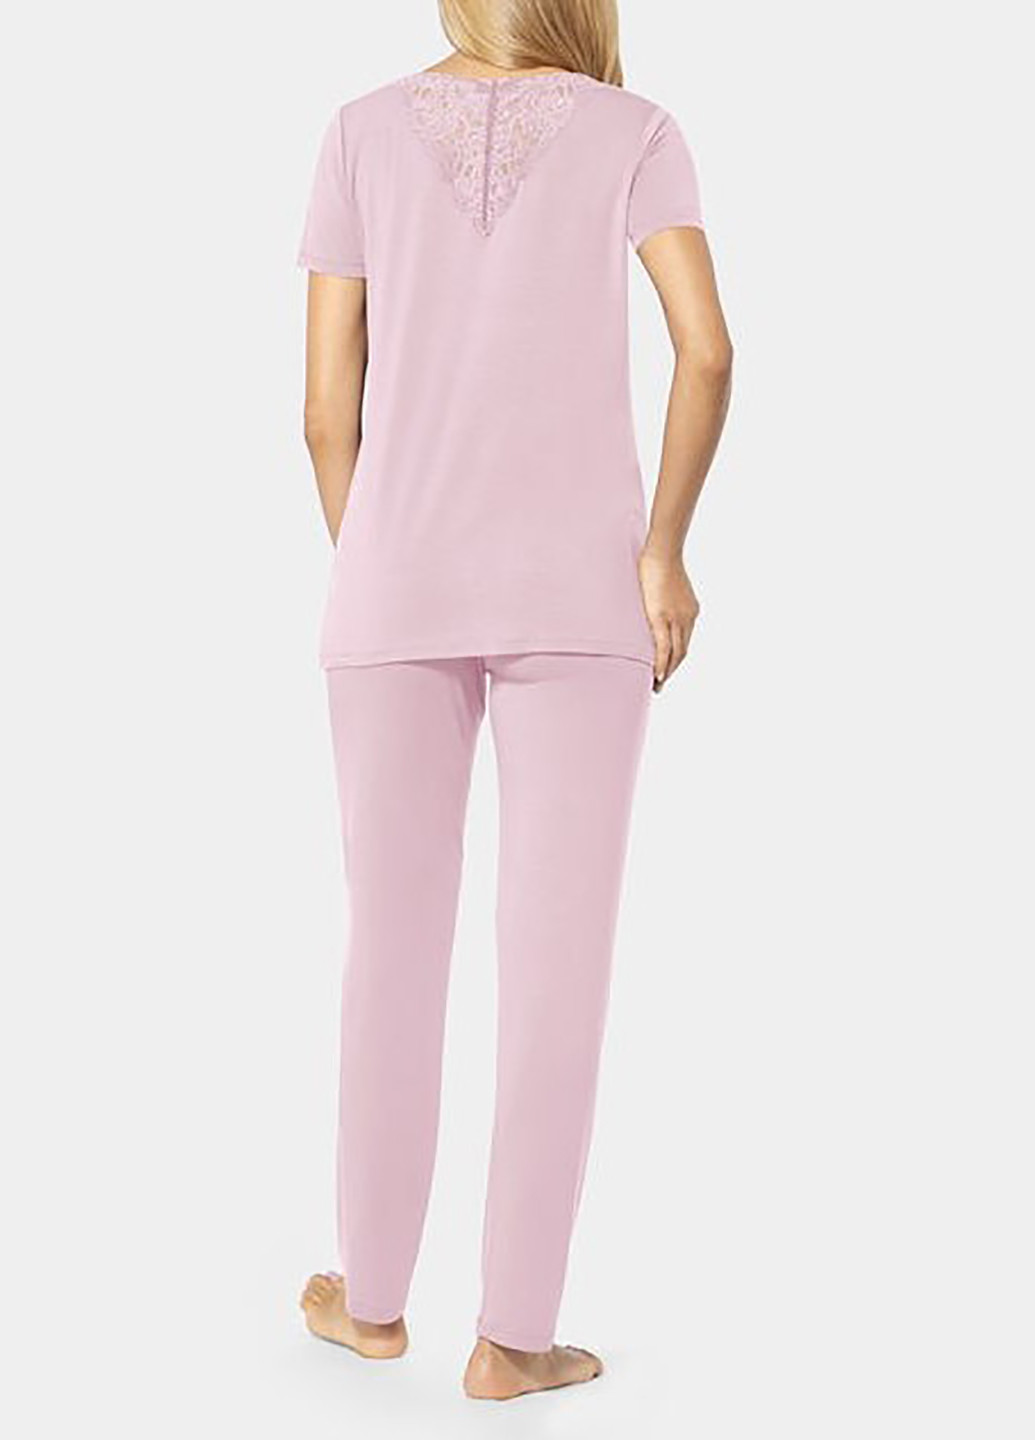 Светло-розовая всесезон пижама (футболка, брюки) футболка + брюки Triumph